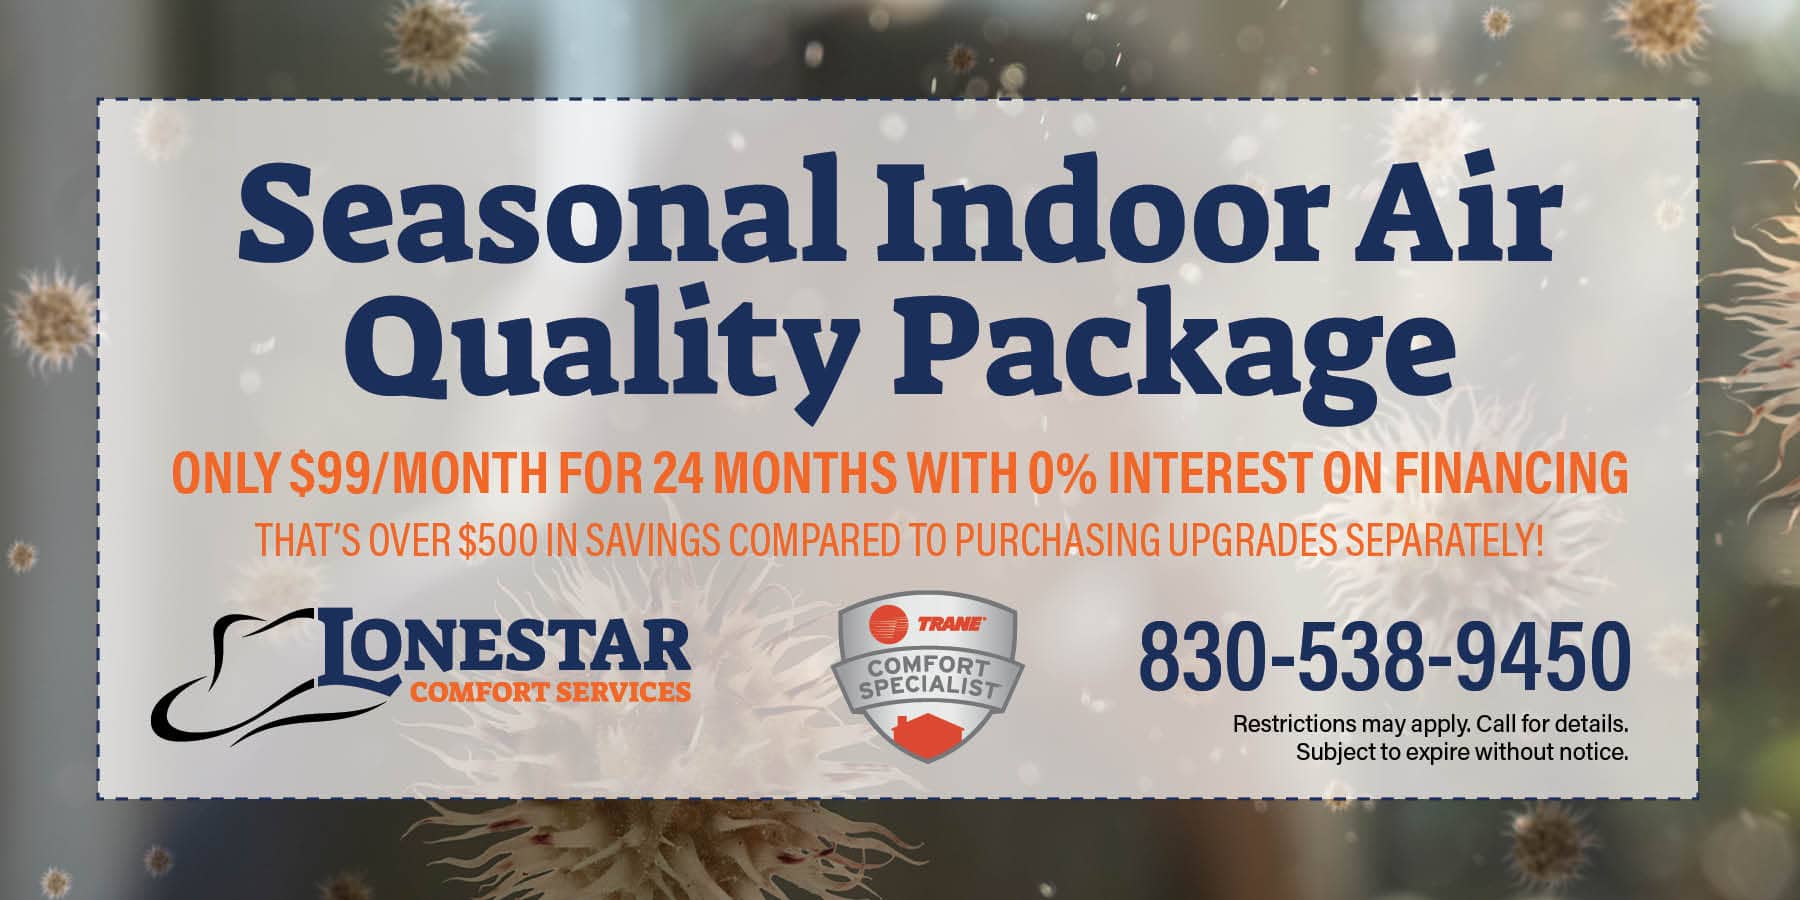 Seasonal Indoor Air Quality Package. Lonestar Comfort Services.